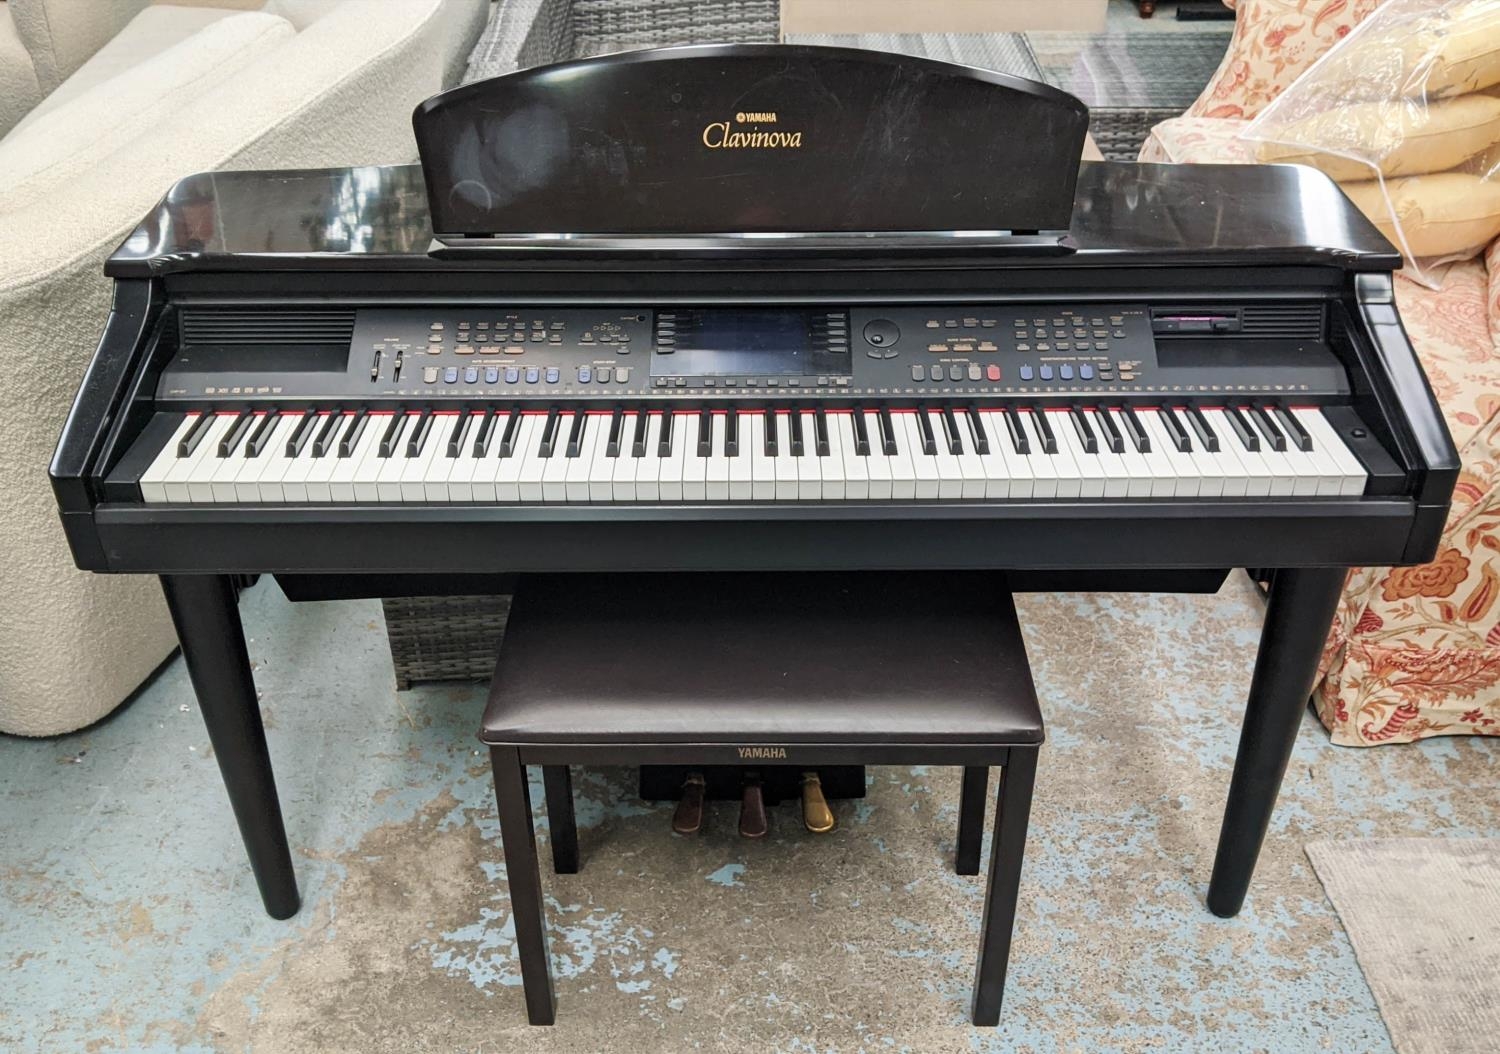 YAMAHA ELECTRIC CLAVINOVA/PIANO, 58cm D x 87cm H x 141cm W, with stool.